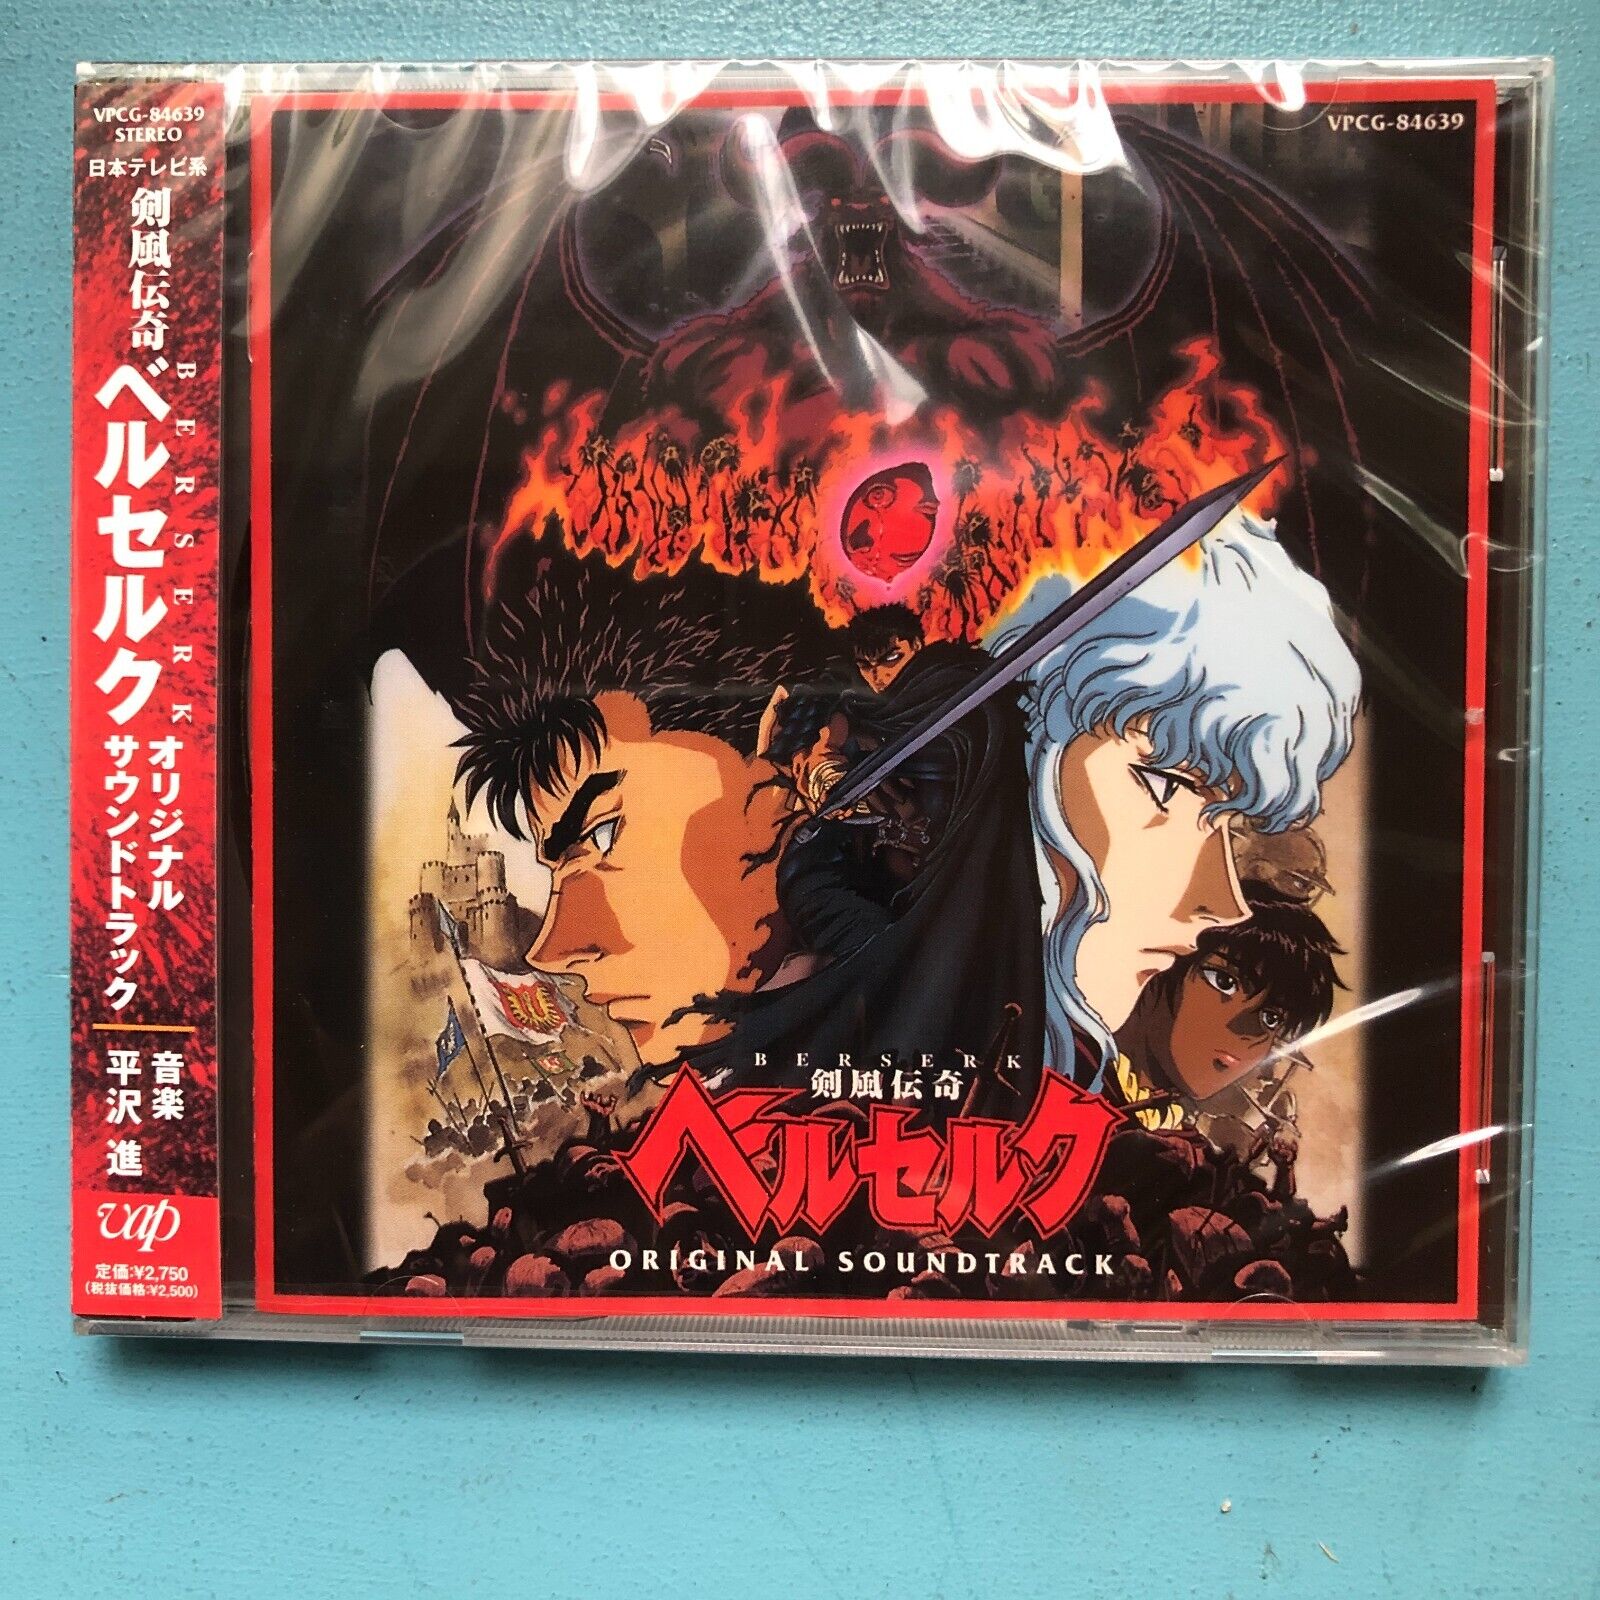 Berserk Original Soundtrack CD 1997 Japanese Anime Susumu Hirasawa  4988021846394 | eBay